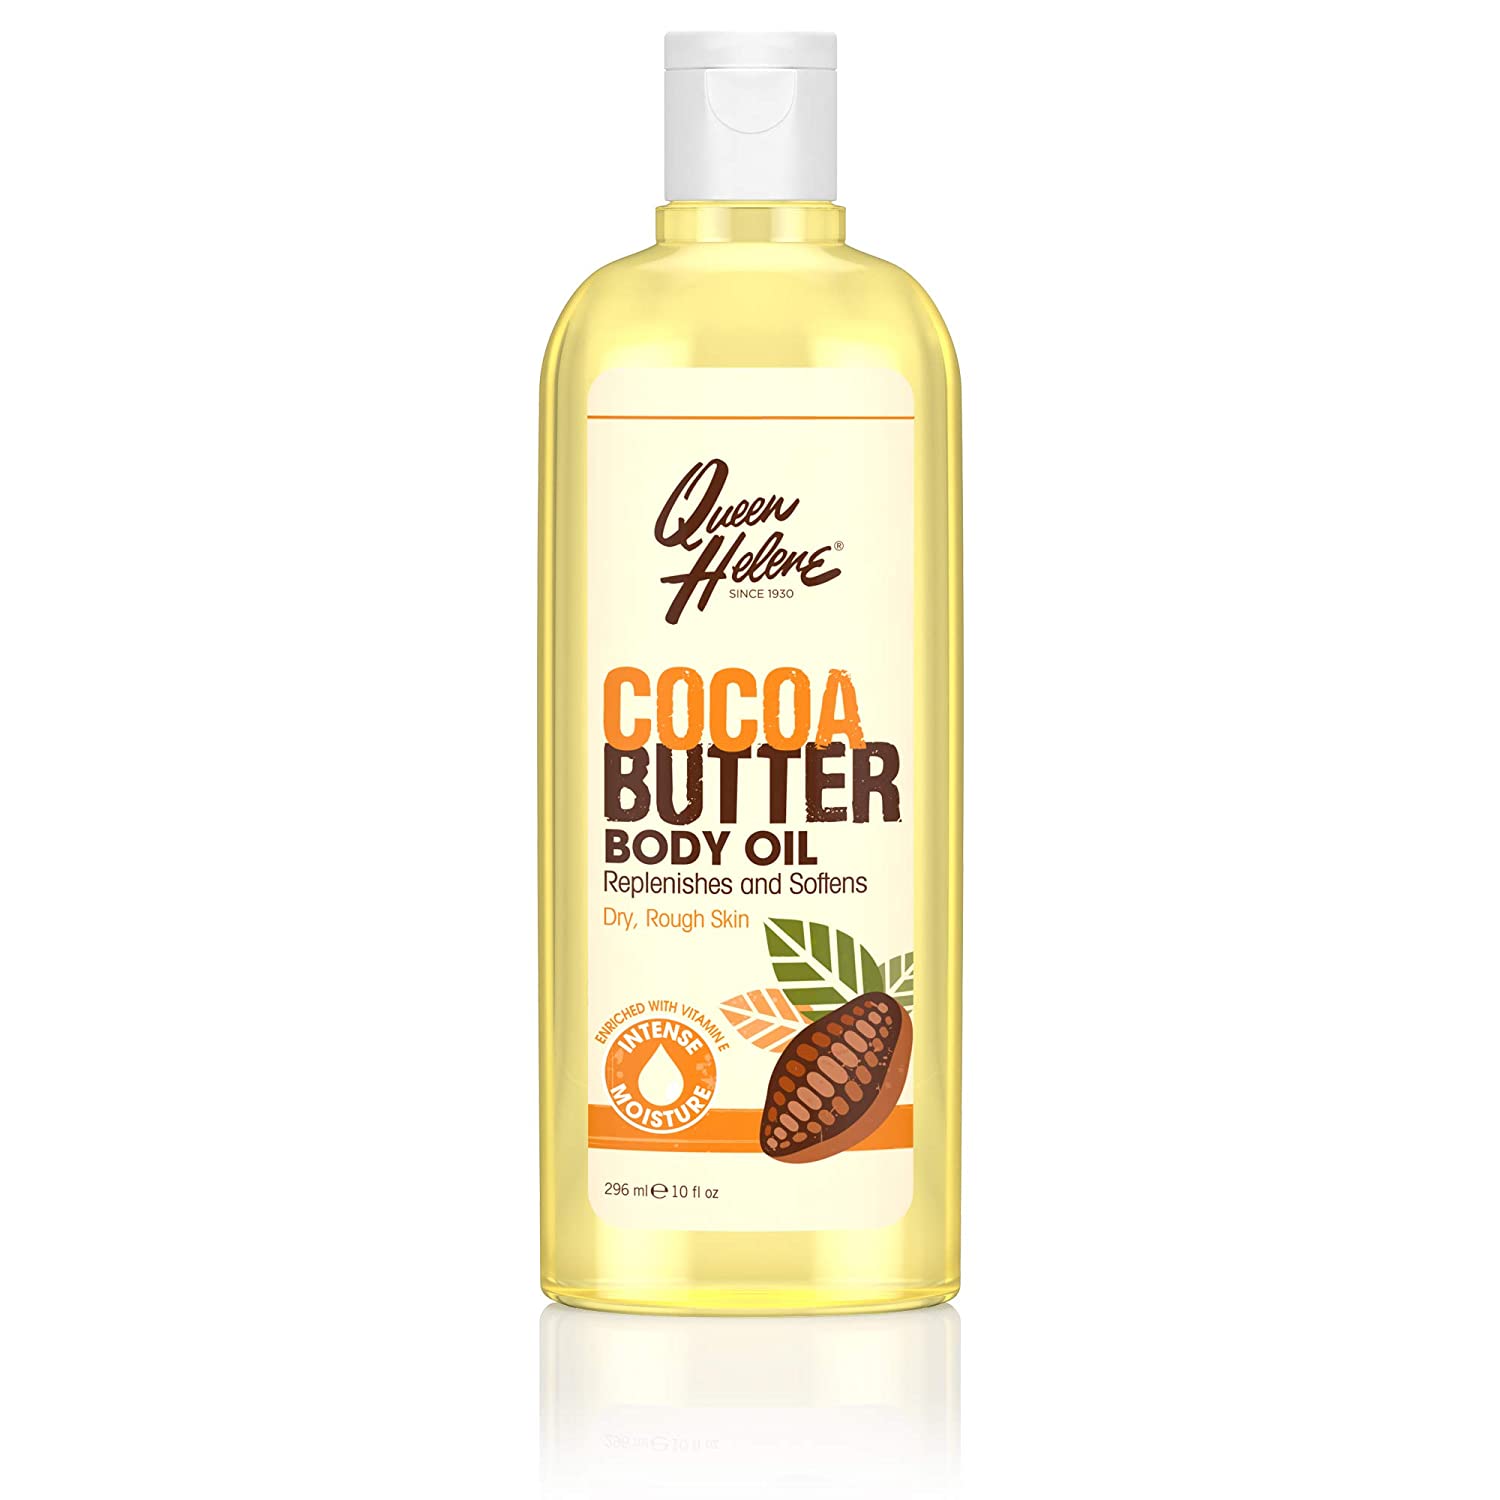 4th Ave Market: Queen Helene Cocoa Butter Body Oil With Vitamin-E 10oz